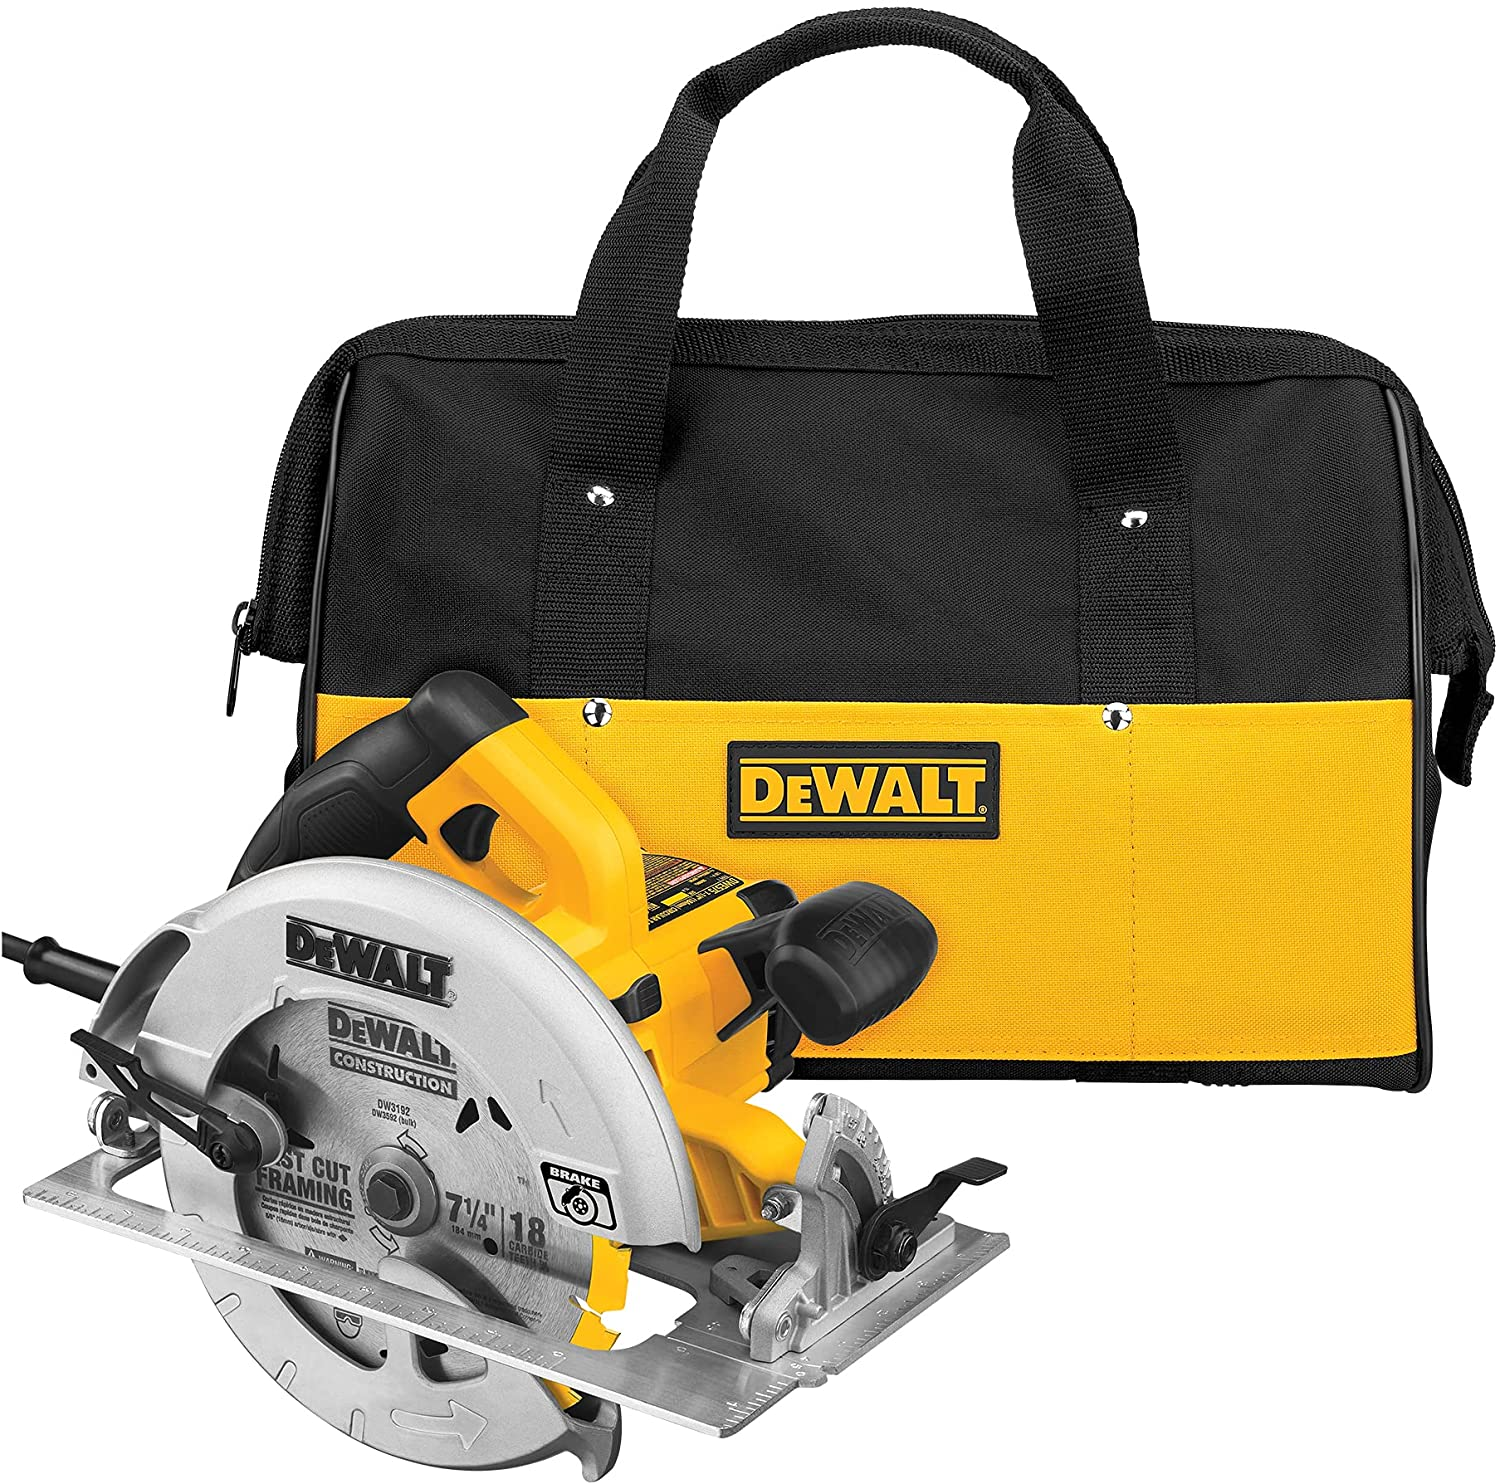 DEWALT 7-1/4-Inch Circular Saw with Electric Brake, 15-Amp, Corded (DWE575SB) , Yellow - Power Circular Saws - Amazon.com $129.14